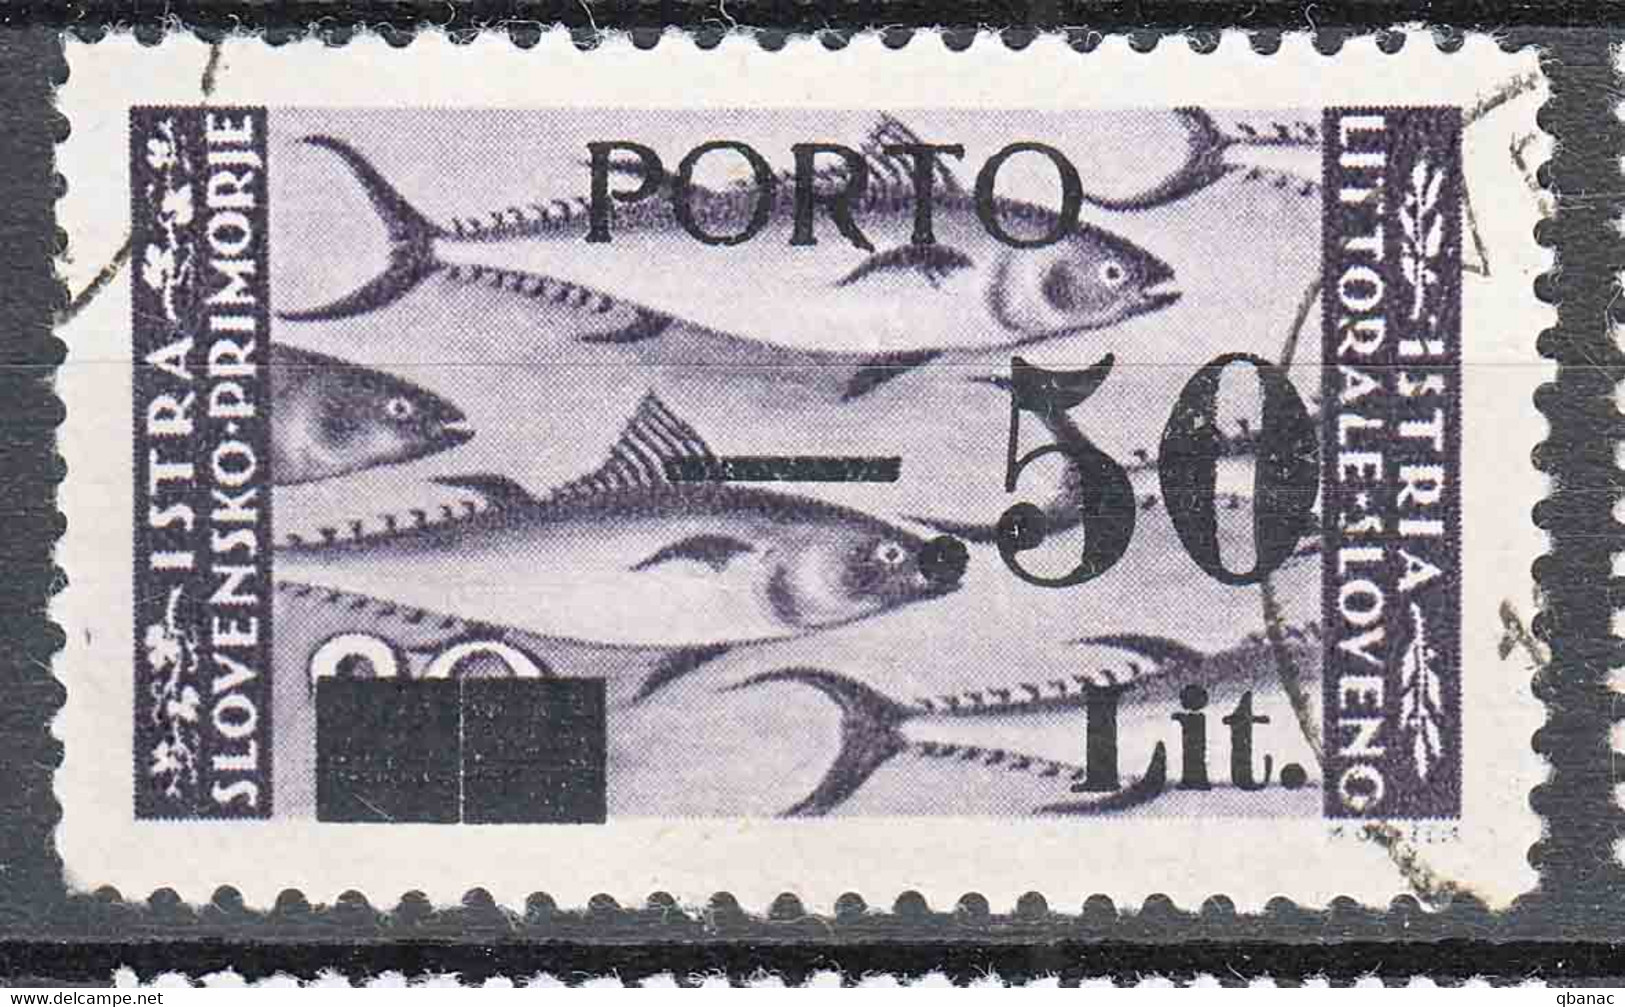 Istria Litorale Yugoslavia Occupation, Porto 1946 Sassone#6 Overprint II, Used - Yugoslavian Occ.: Istria